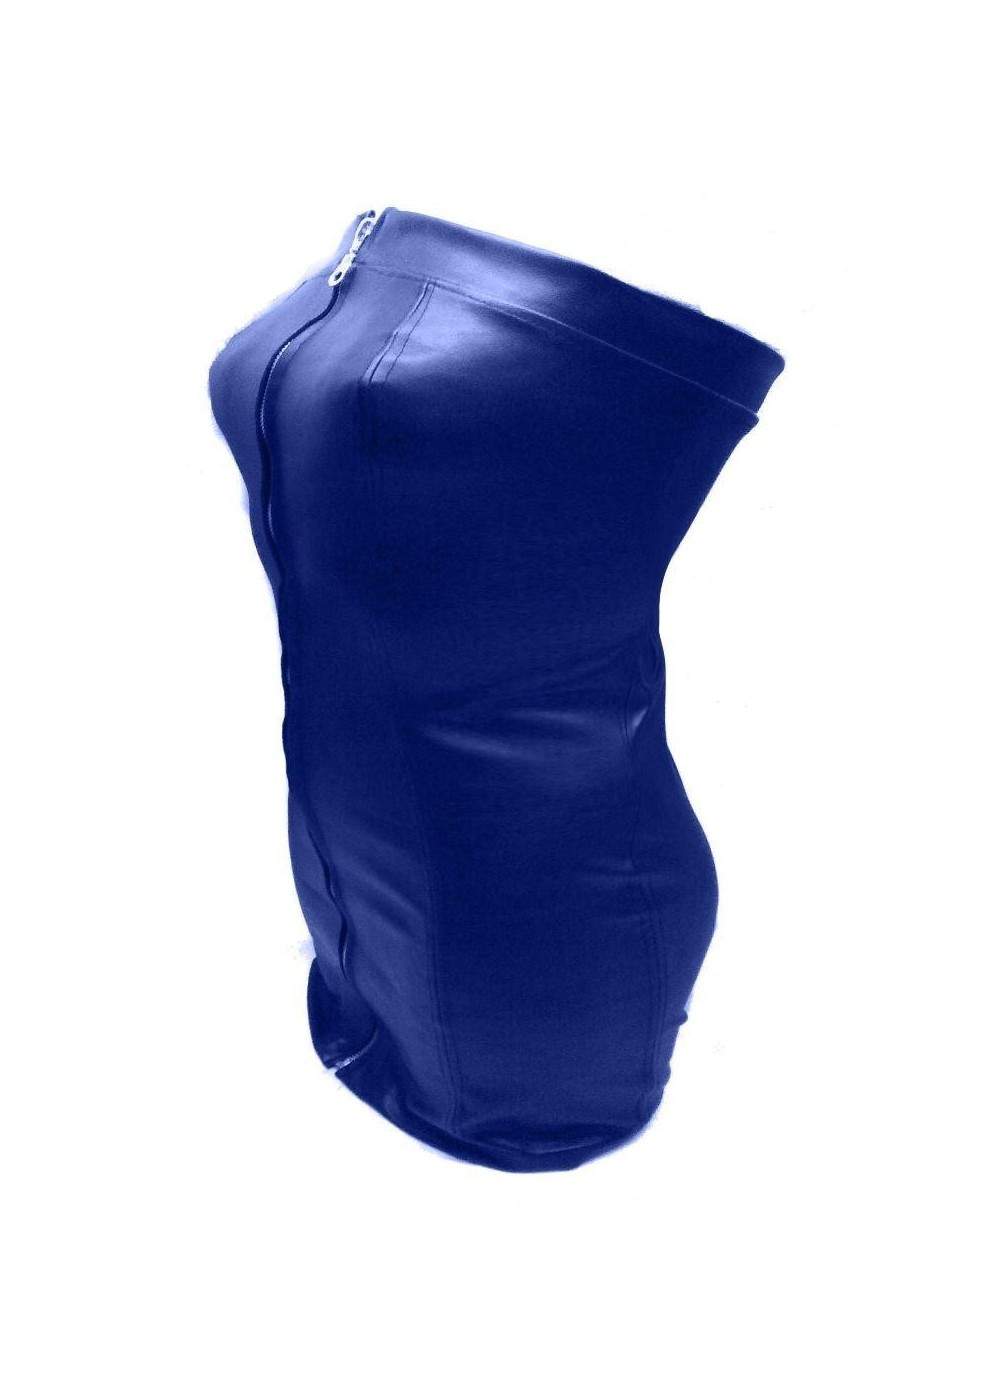 Vestido de cuero muy suave azul talla L - XXL (44 - 52) - Deutsche Produktion